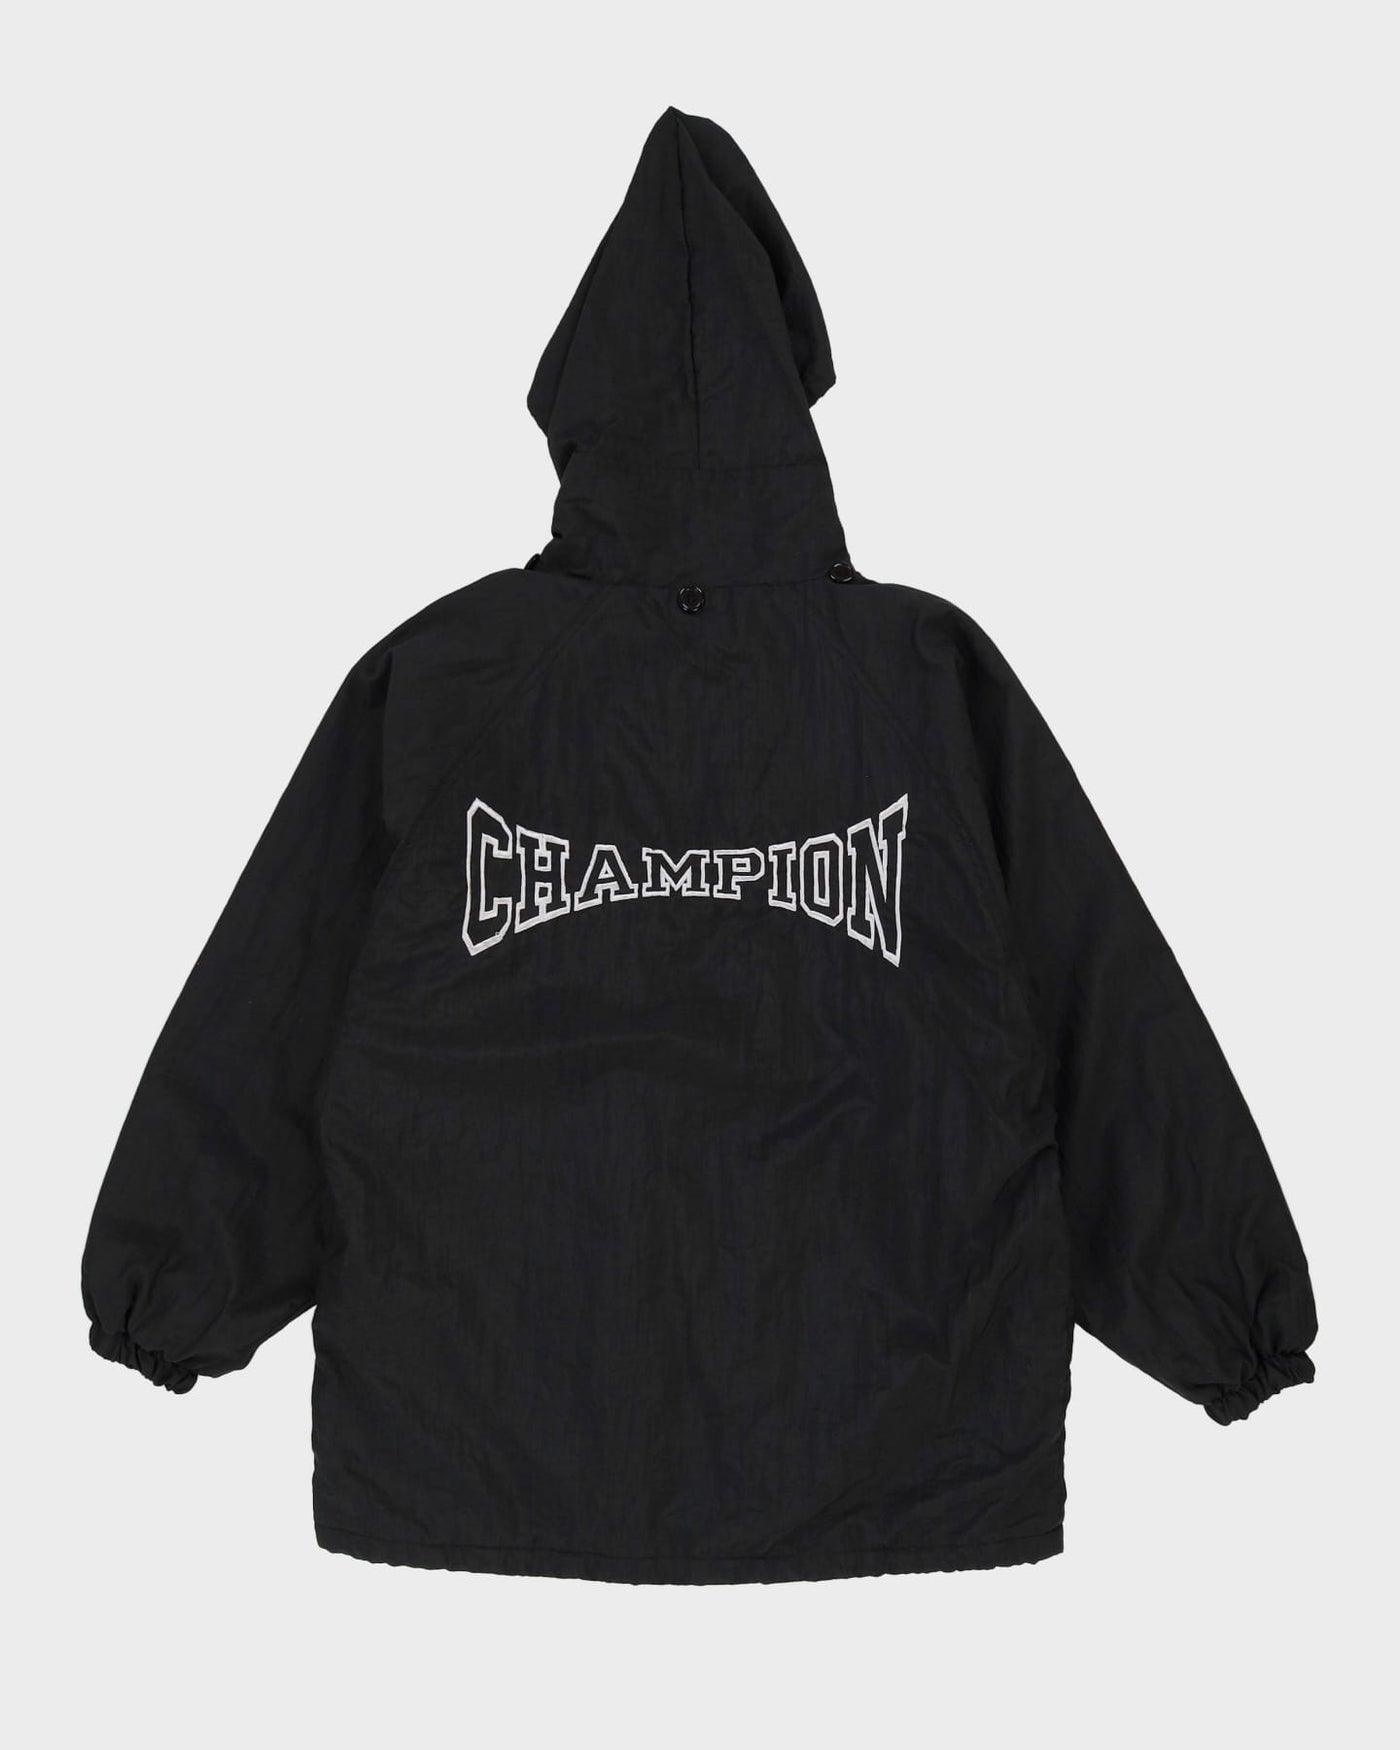 Champion Black Padded Hooded Anorak Jacket - S